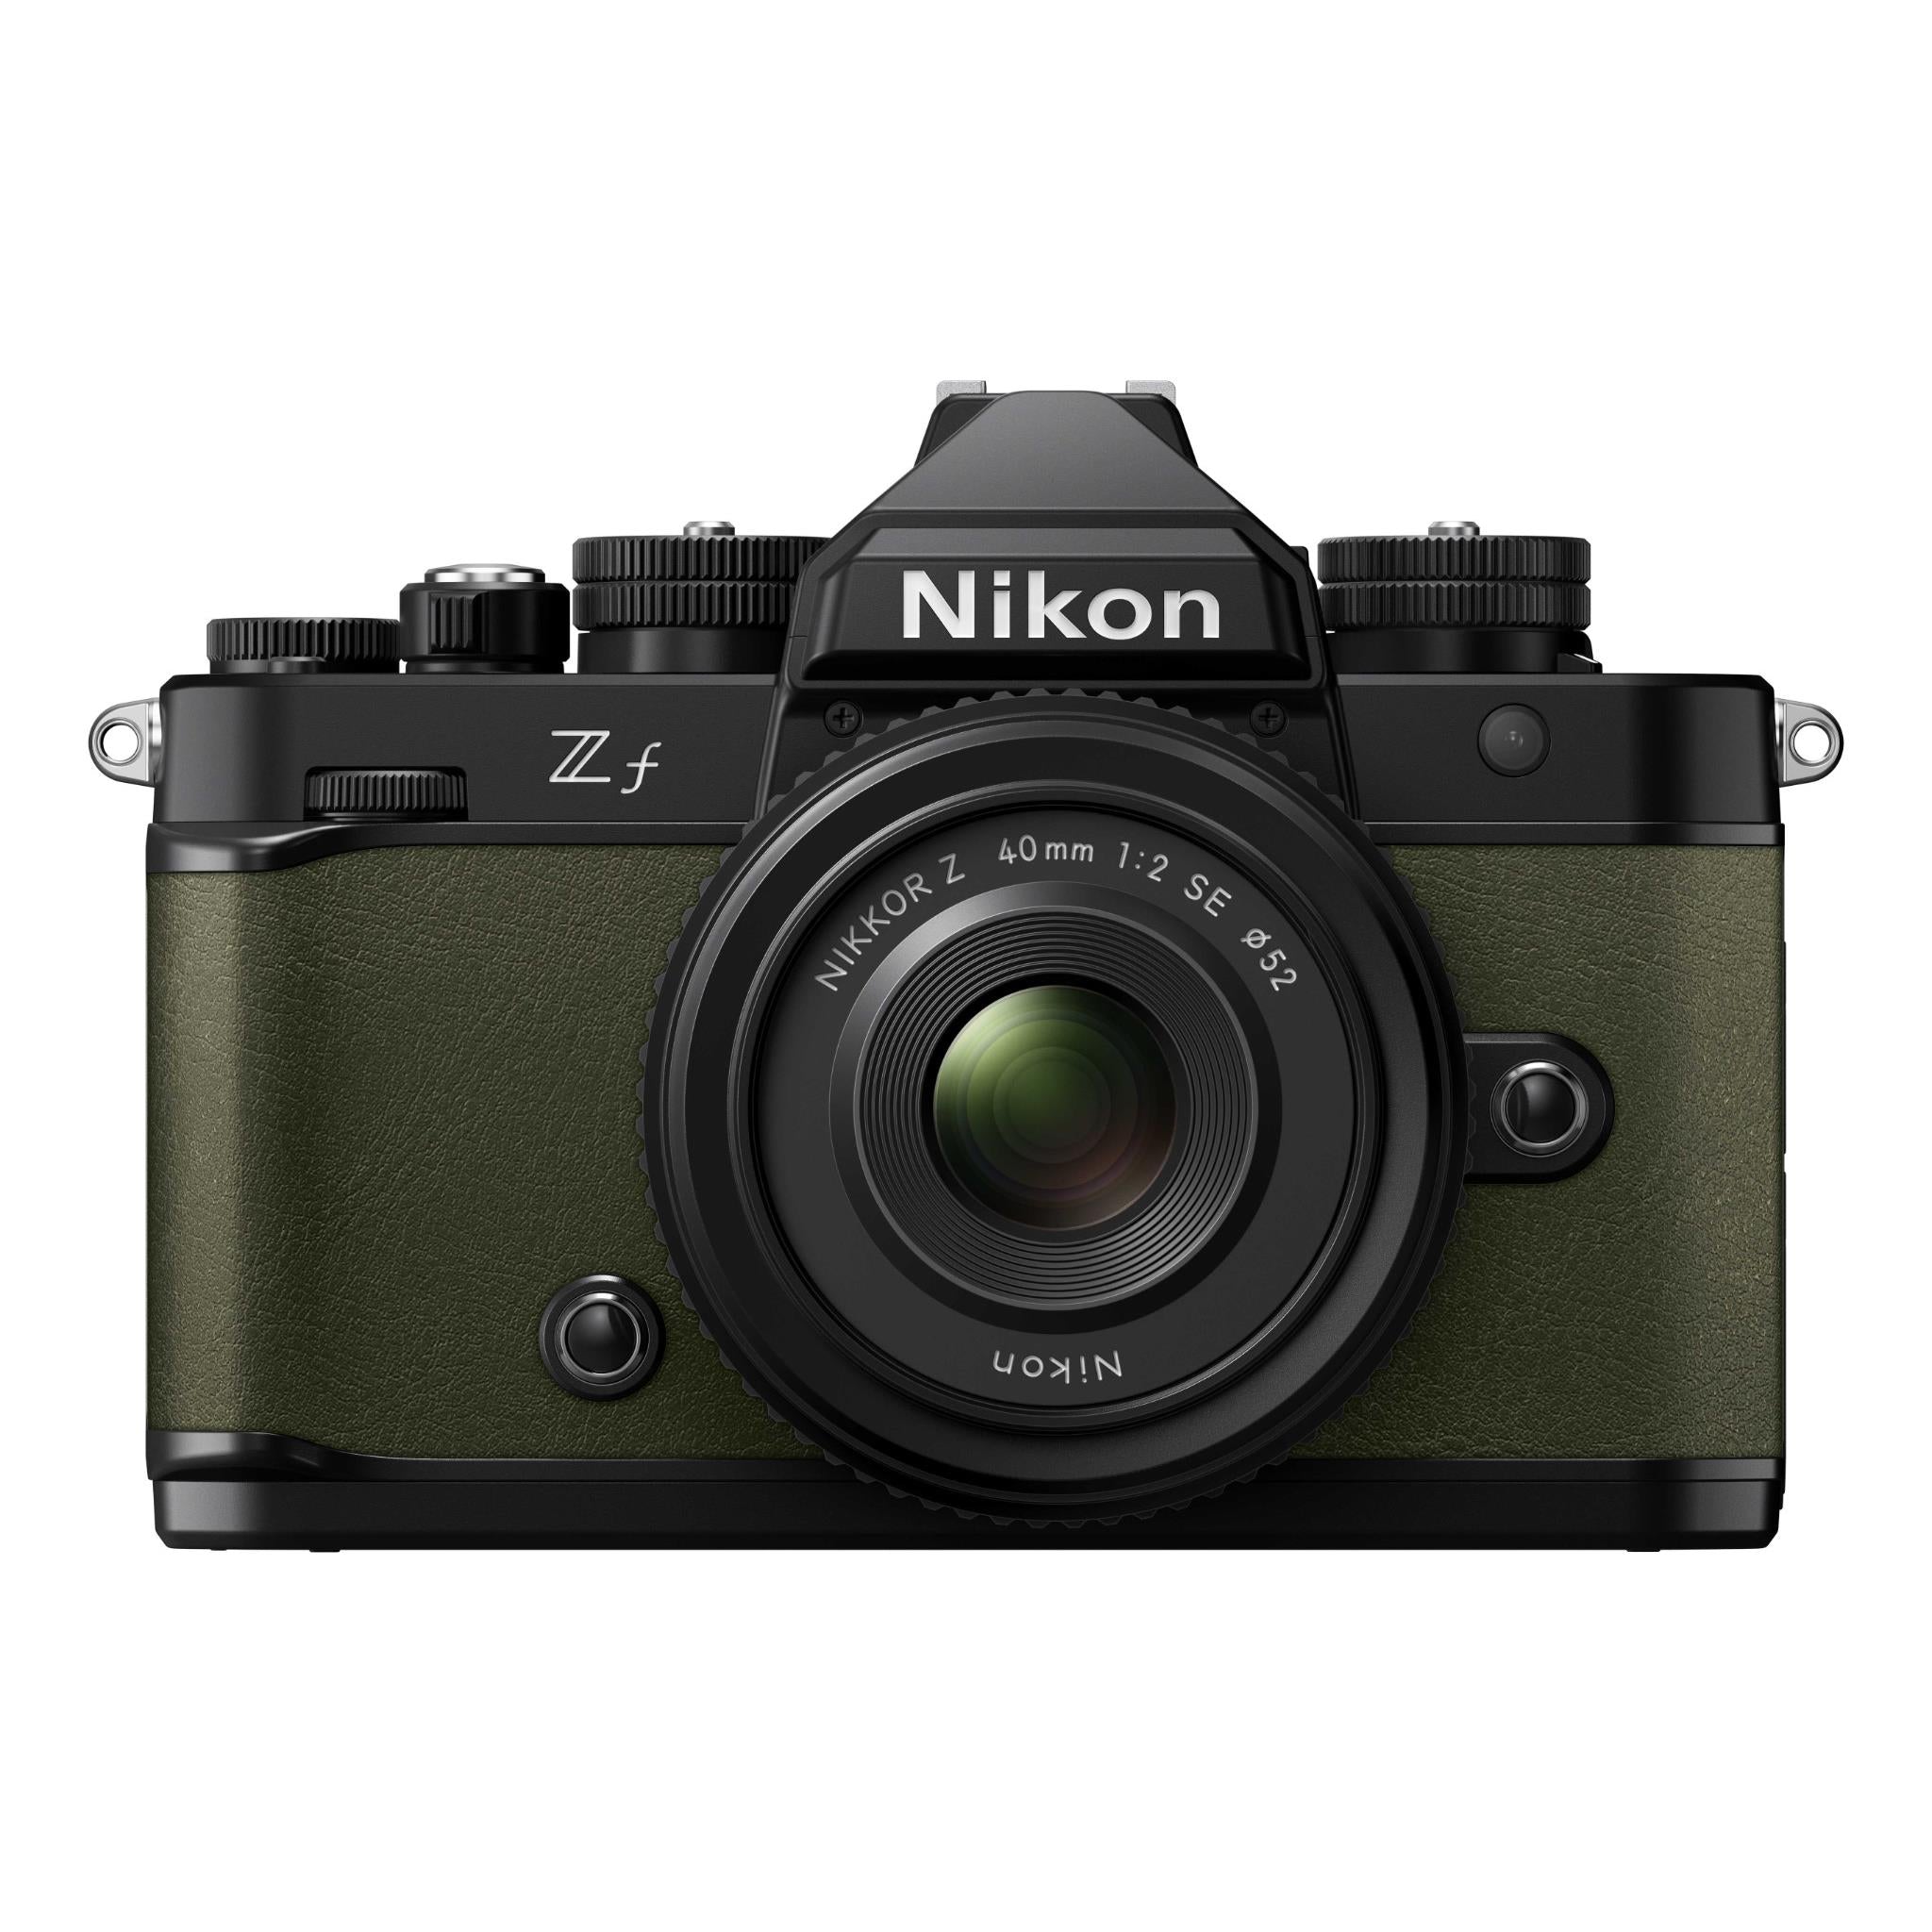 nikon z f full frame mirrorless camera with nikkor z 40mm lens (moss green)